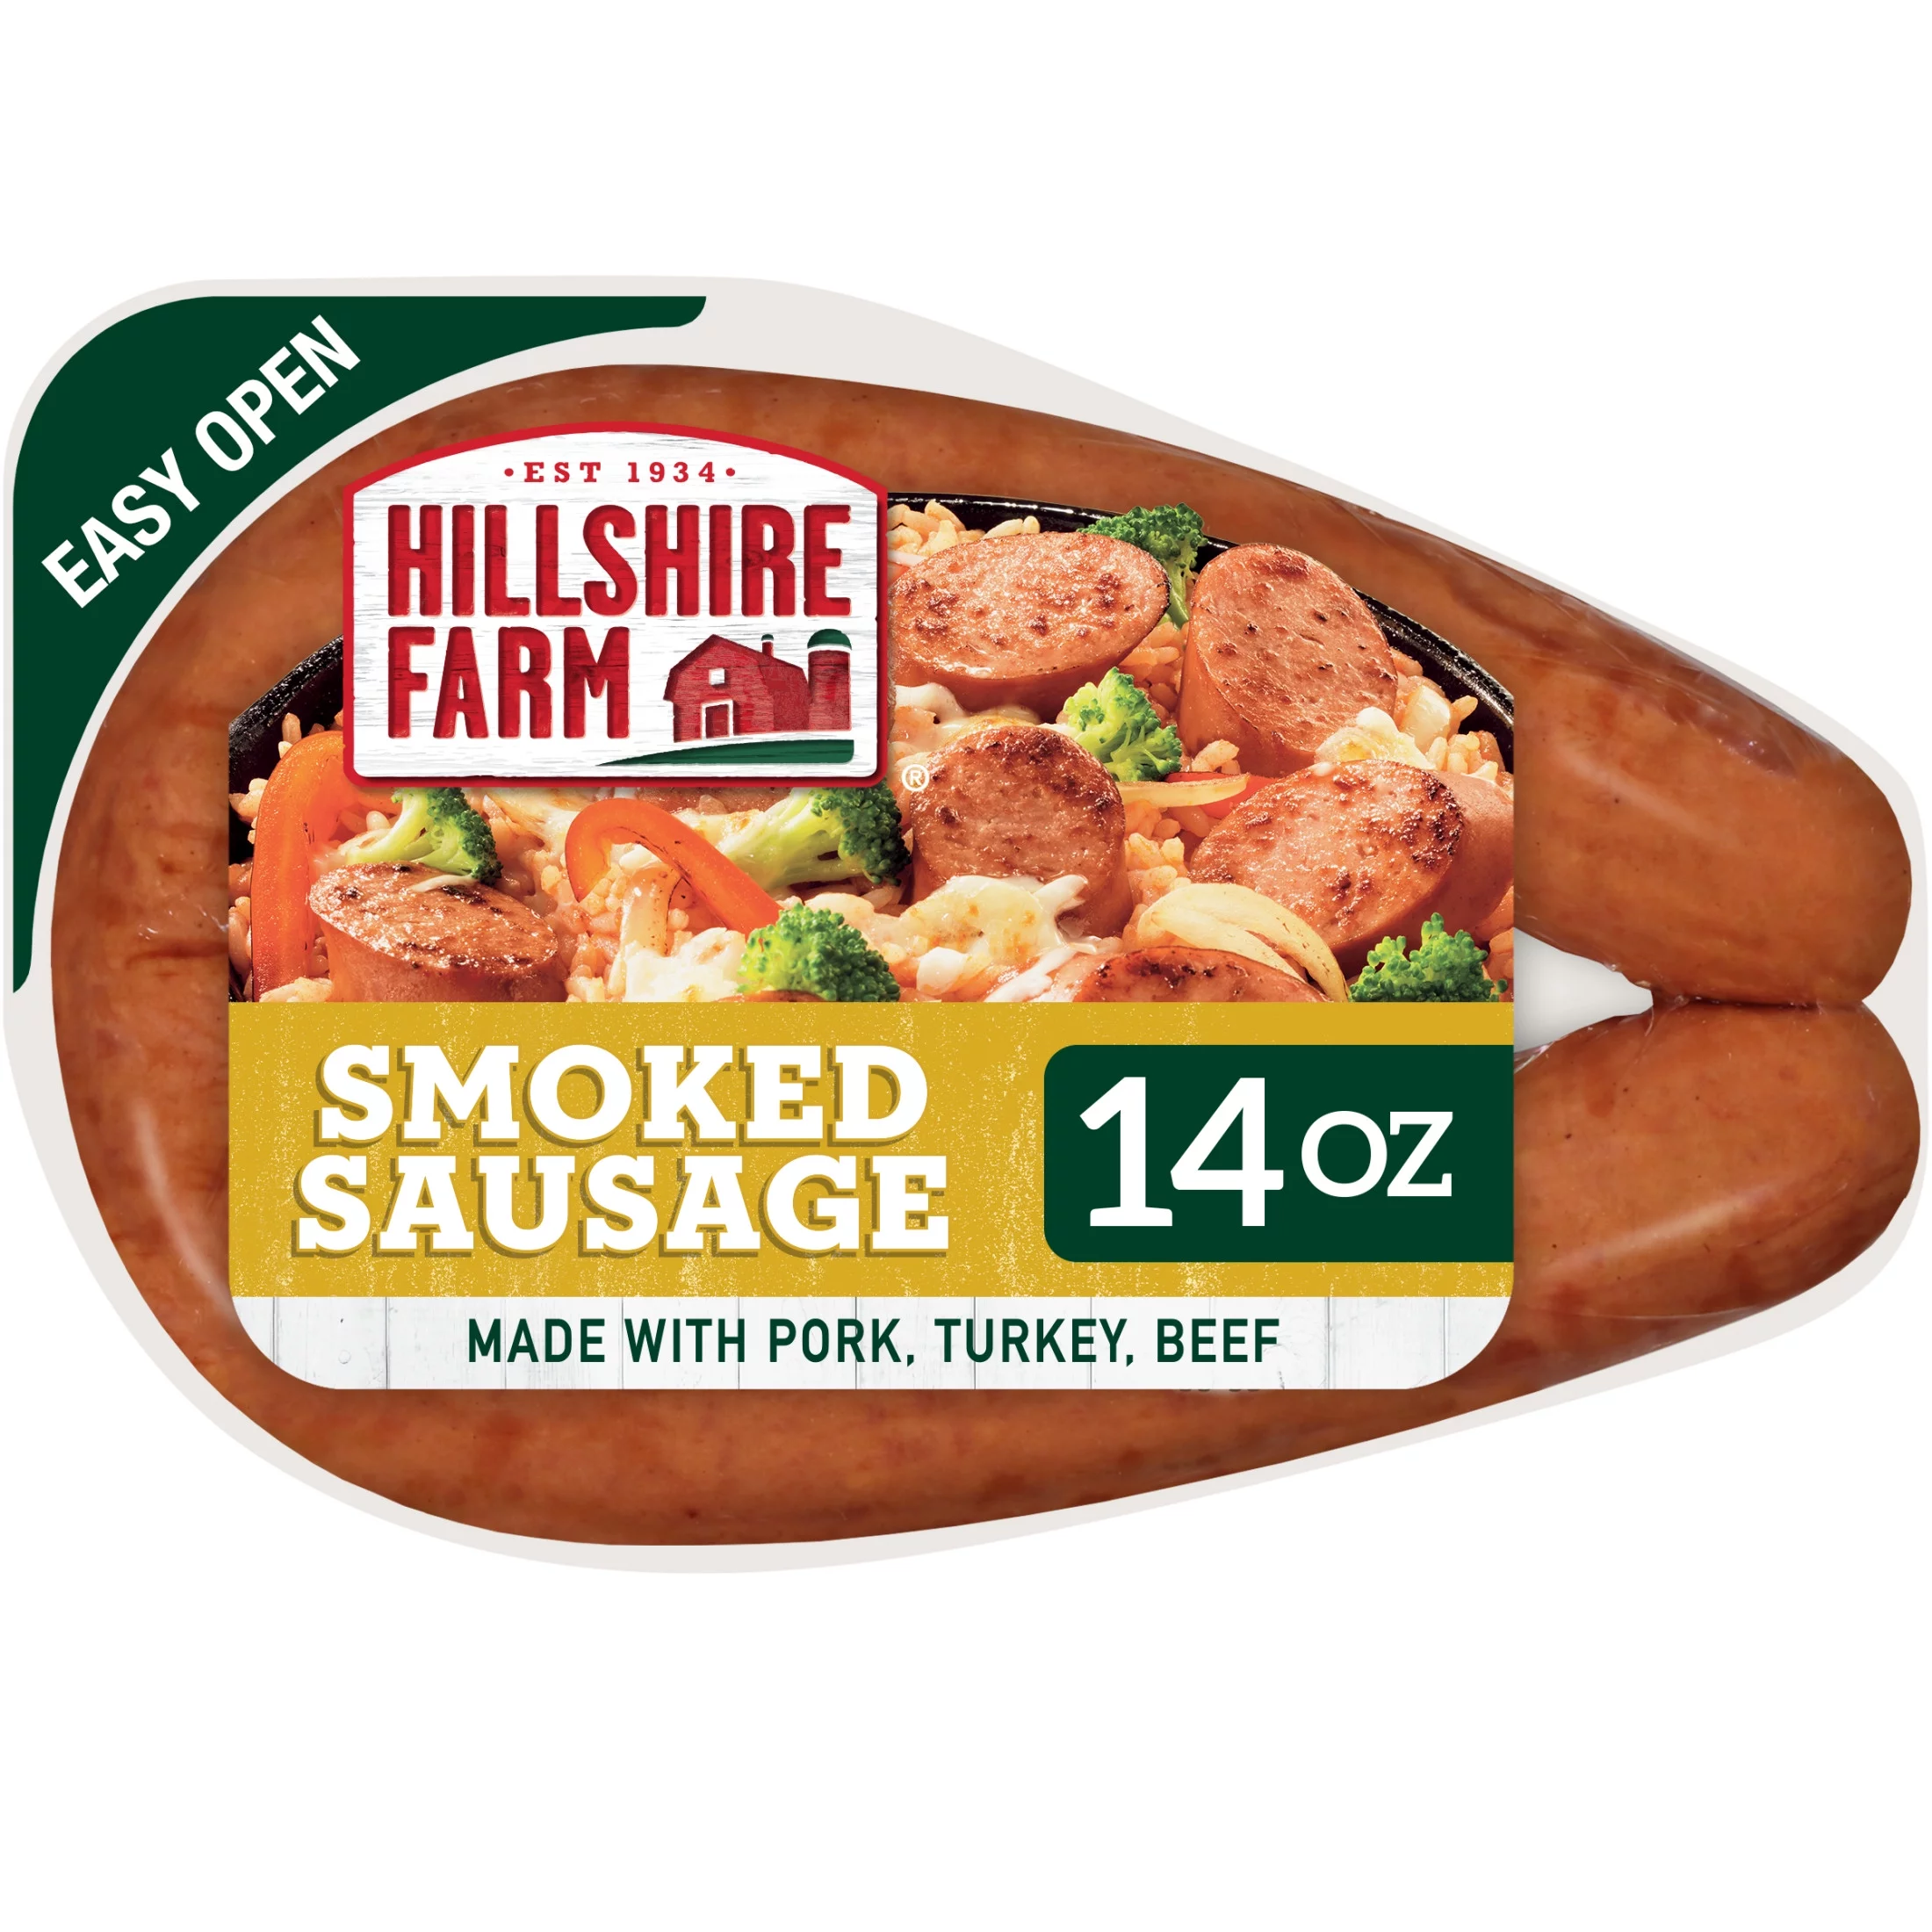 Smoked Sausage made by Hillshire Farm